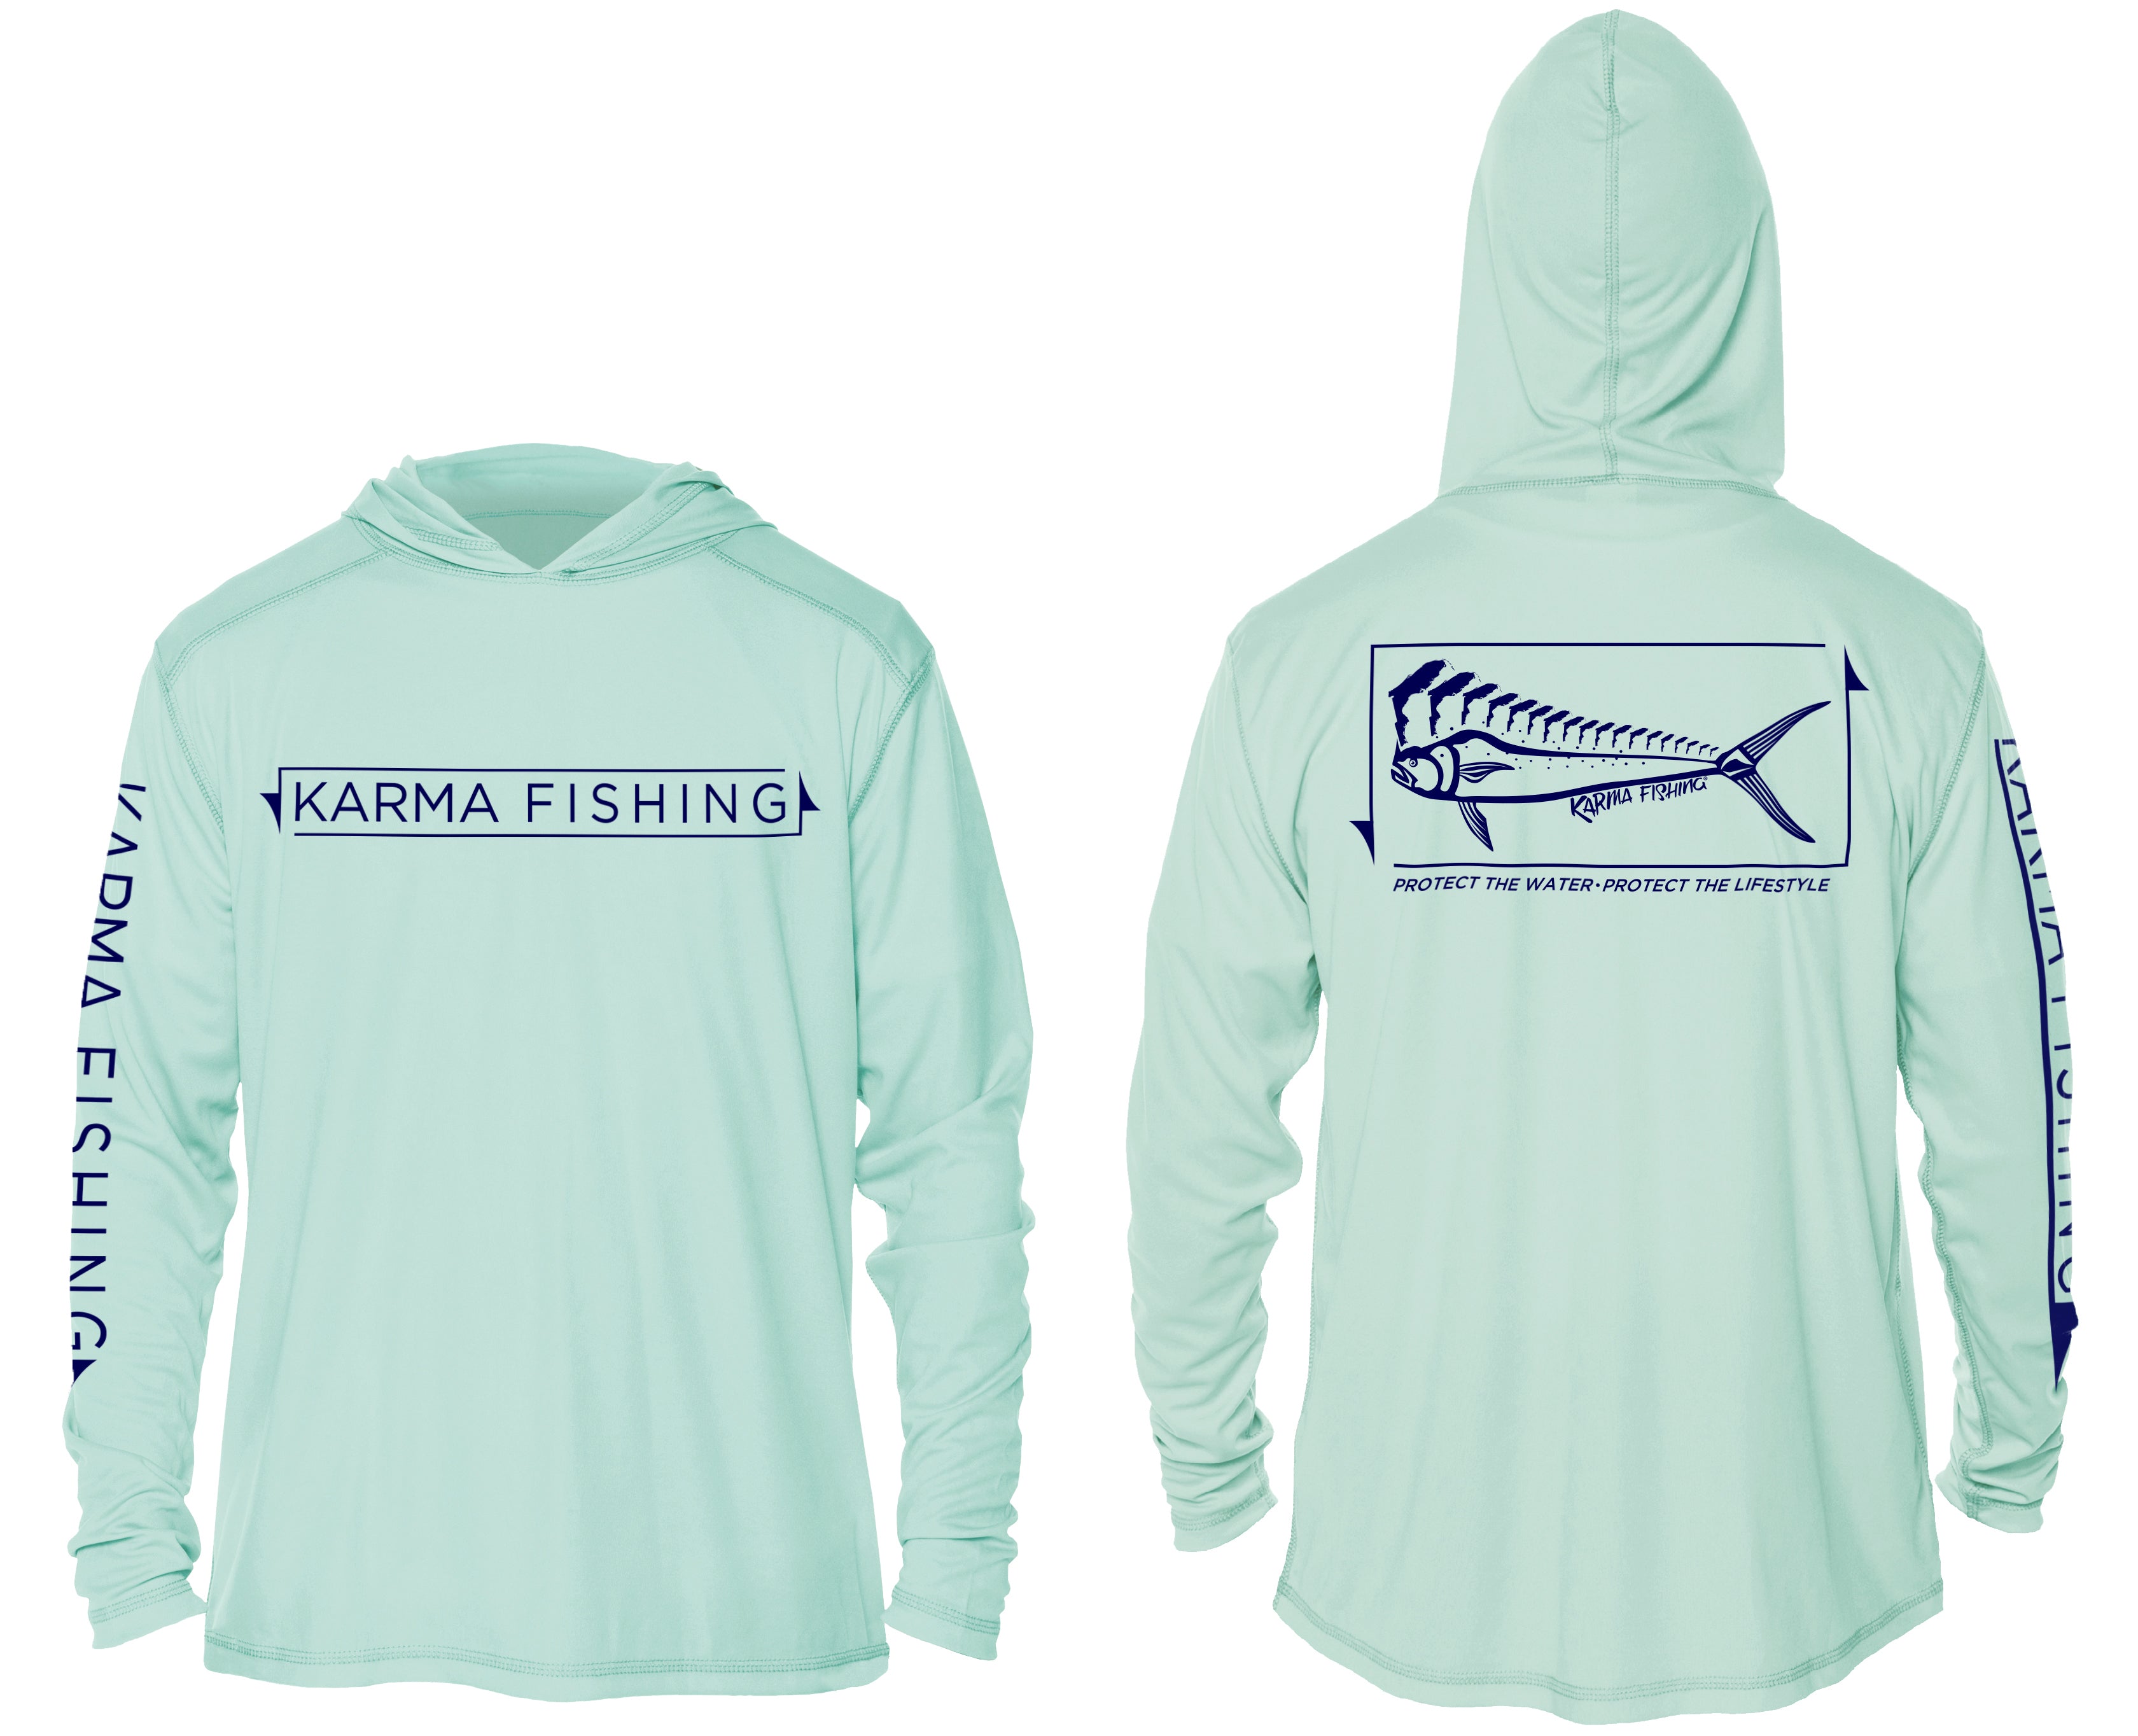 Womens Tech Fishing Shirt Hooded - Flyer Teal x Large